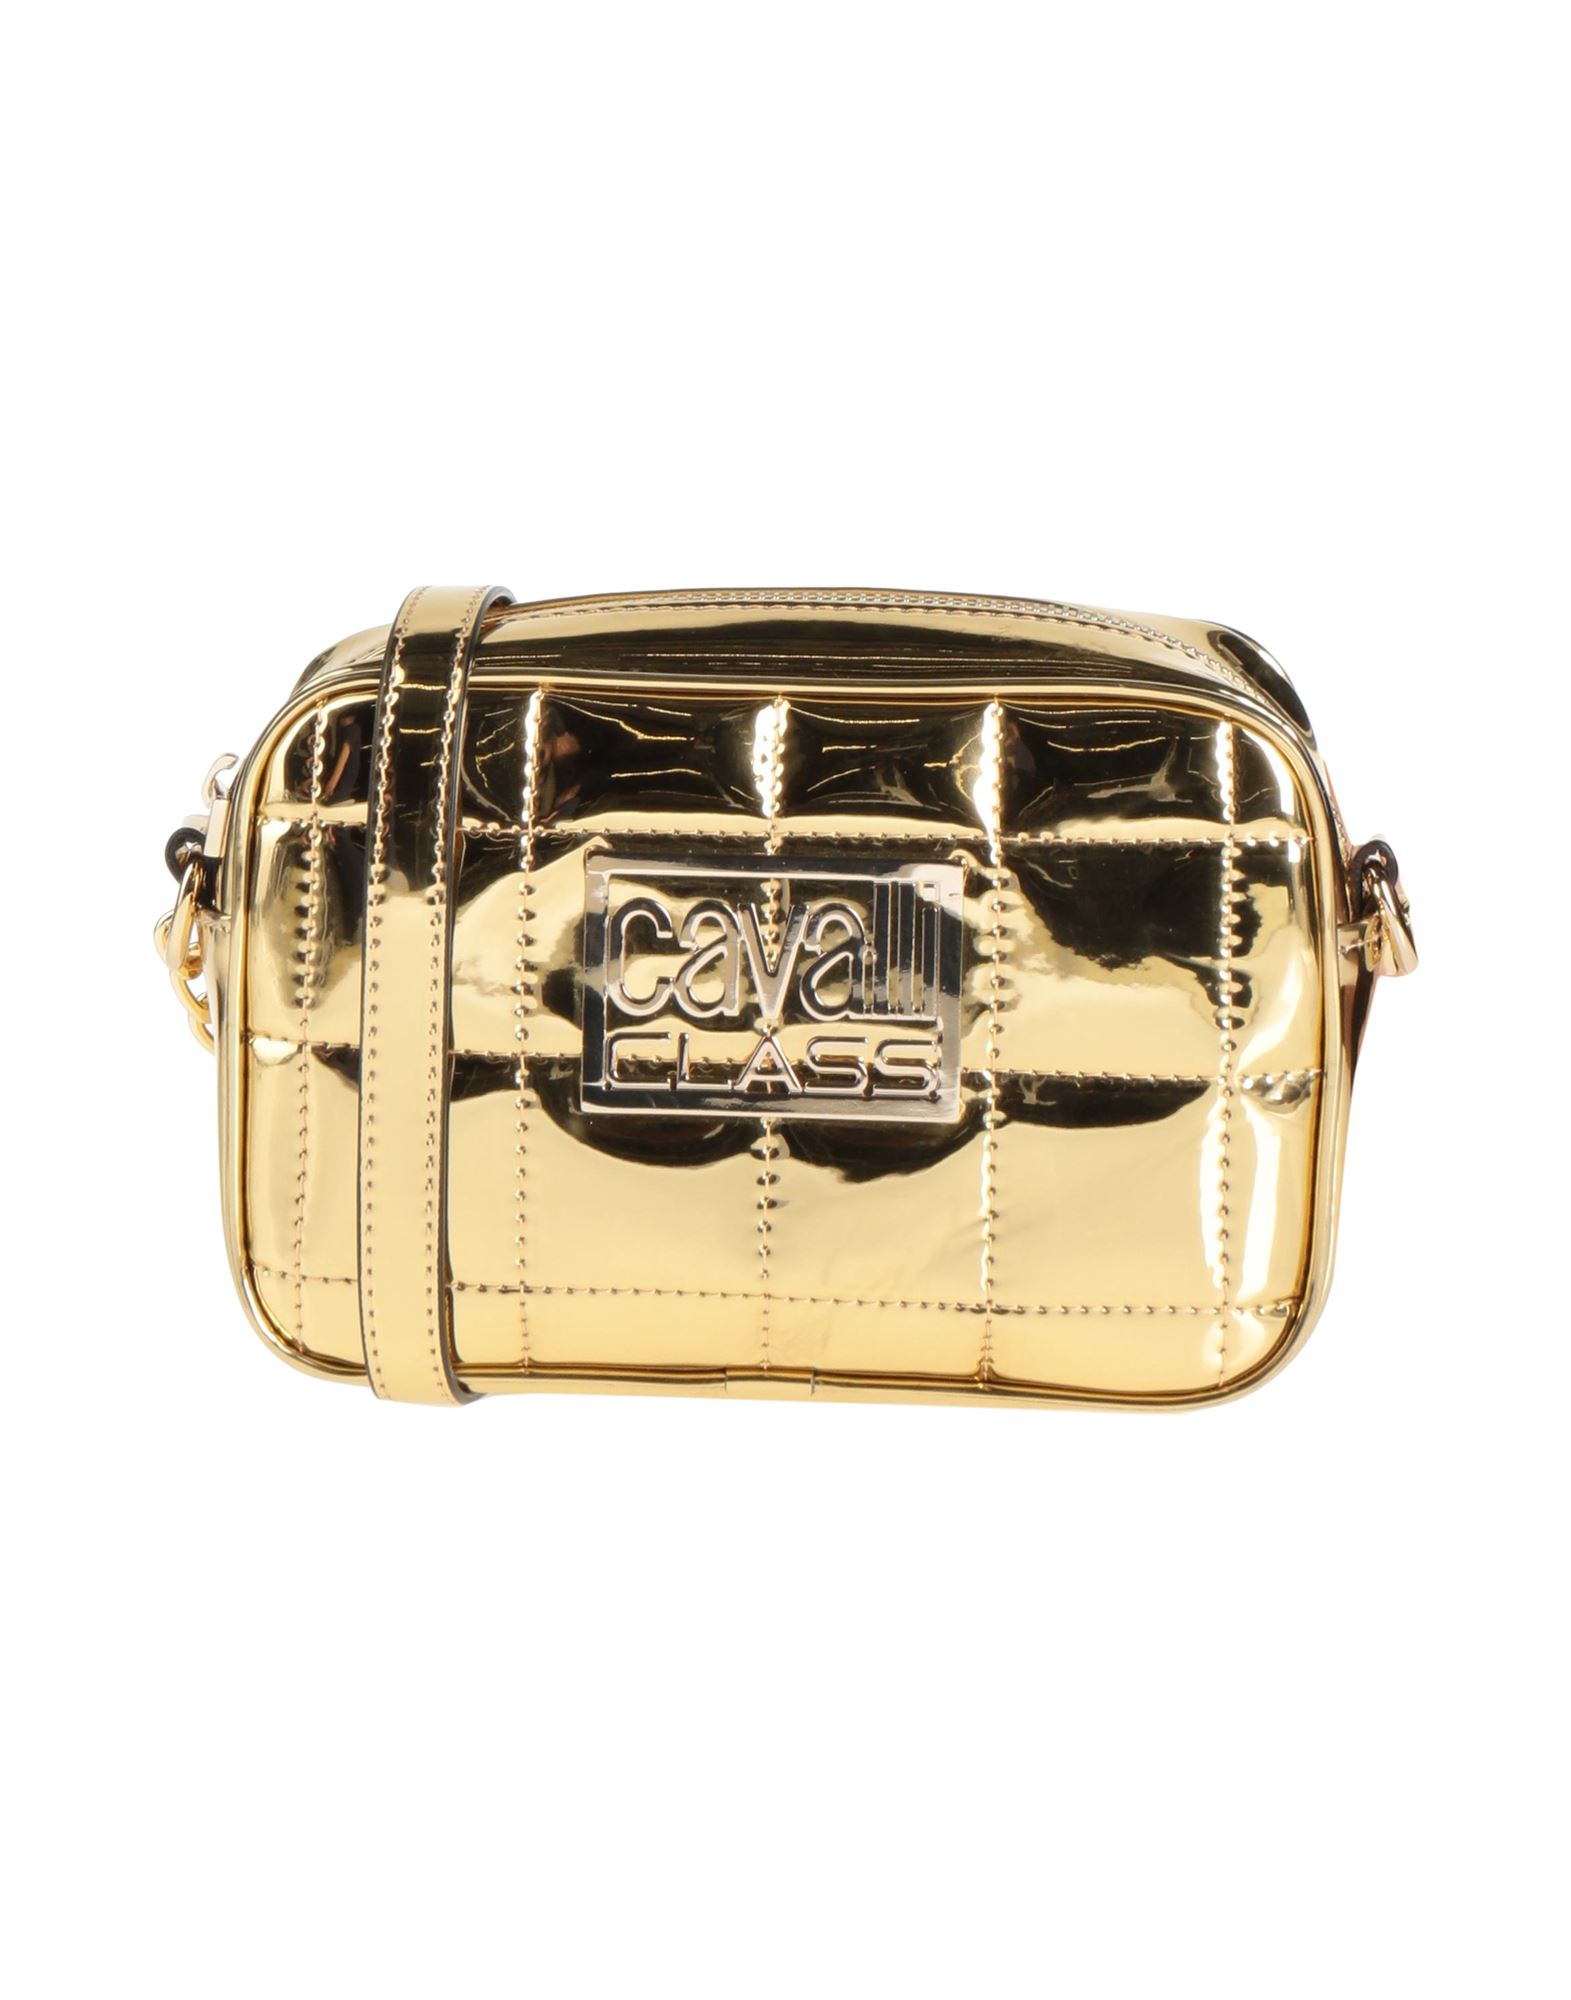 Cavalli Class Handbags In Gold